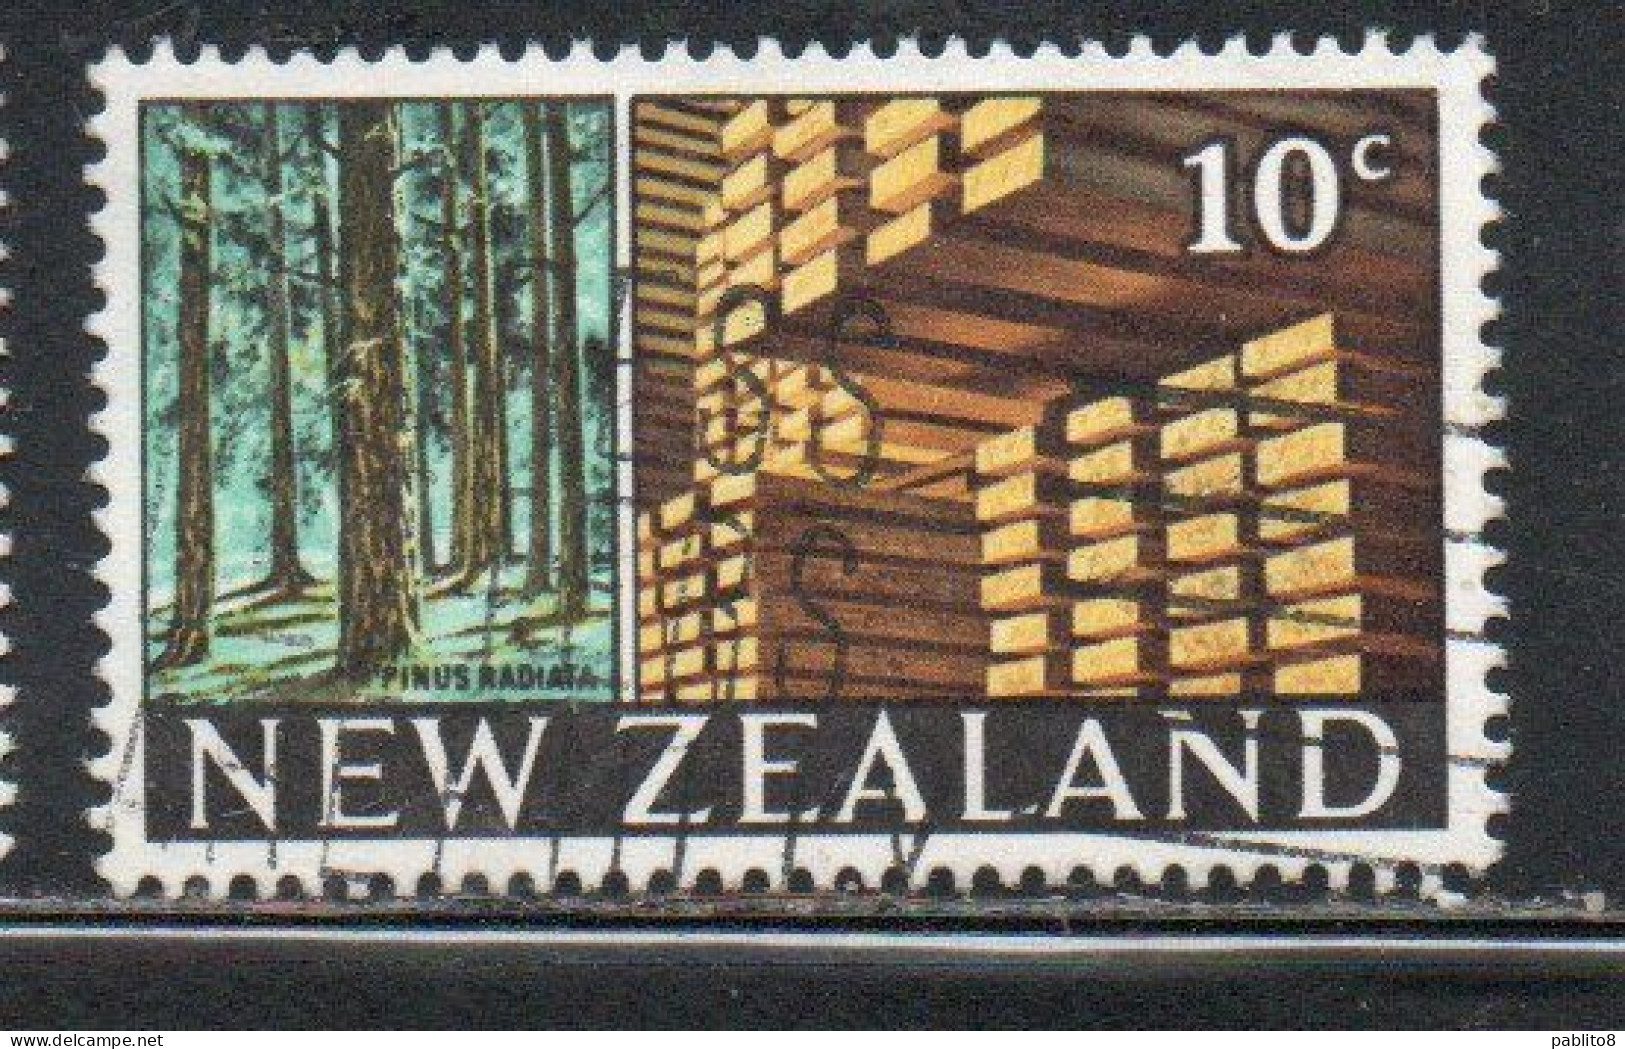 NEW ZEALAND NUOVA ZELANDA 1968 1969 RADATA PINES AND STACKED LUMBER 10c USED USATO OBLITERE' - Gebruikt